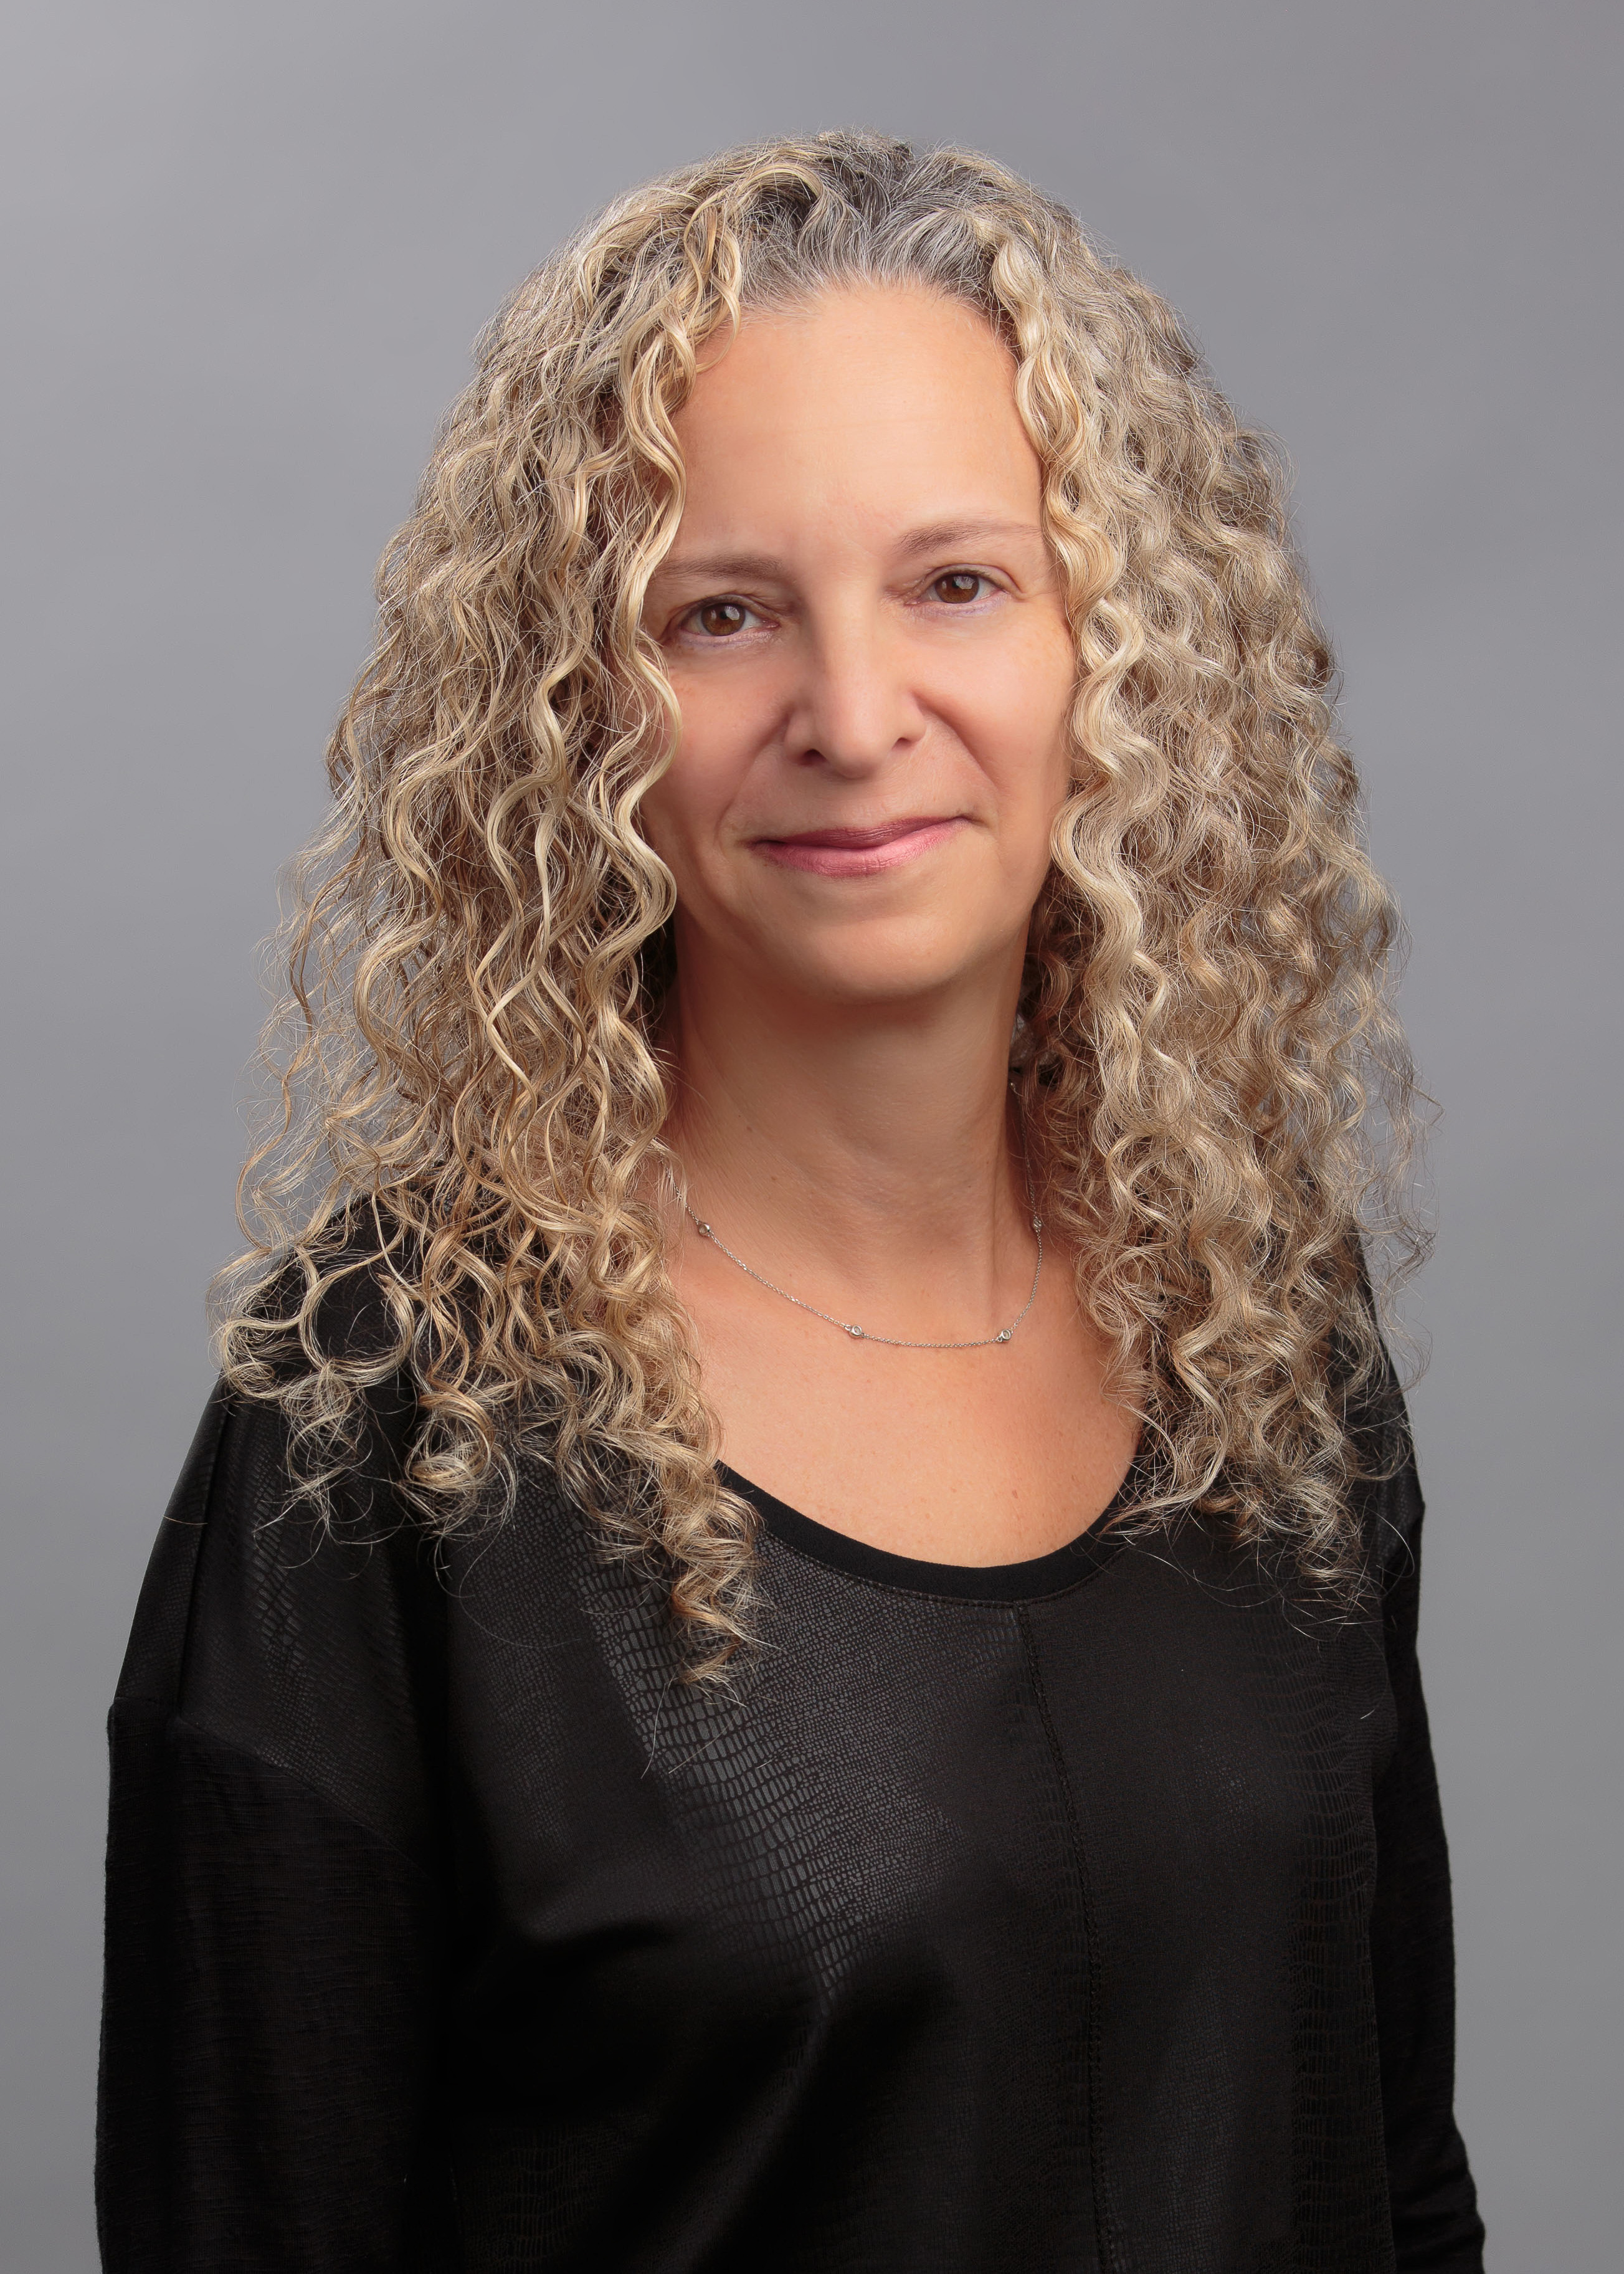 Dr. Sharon Walden - Dentist in Toronto at Dentists on Bloor